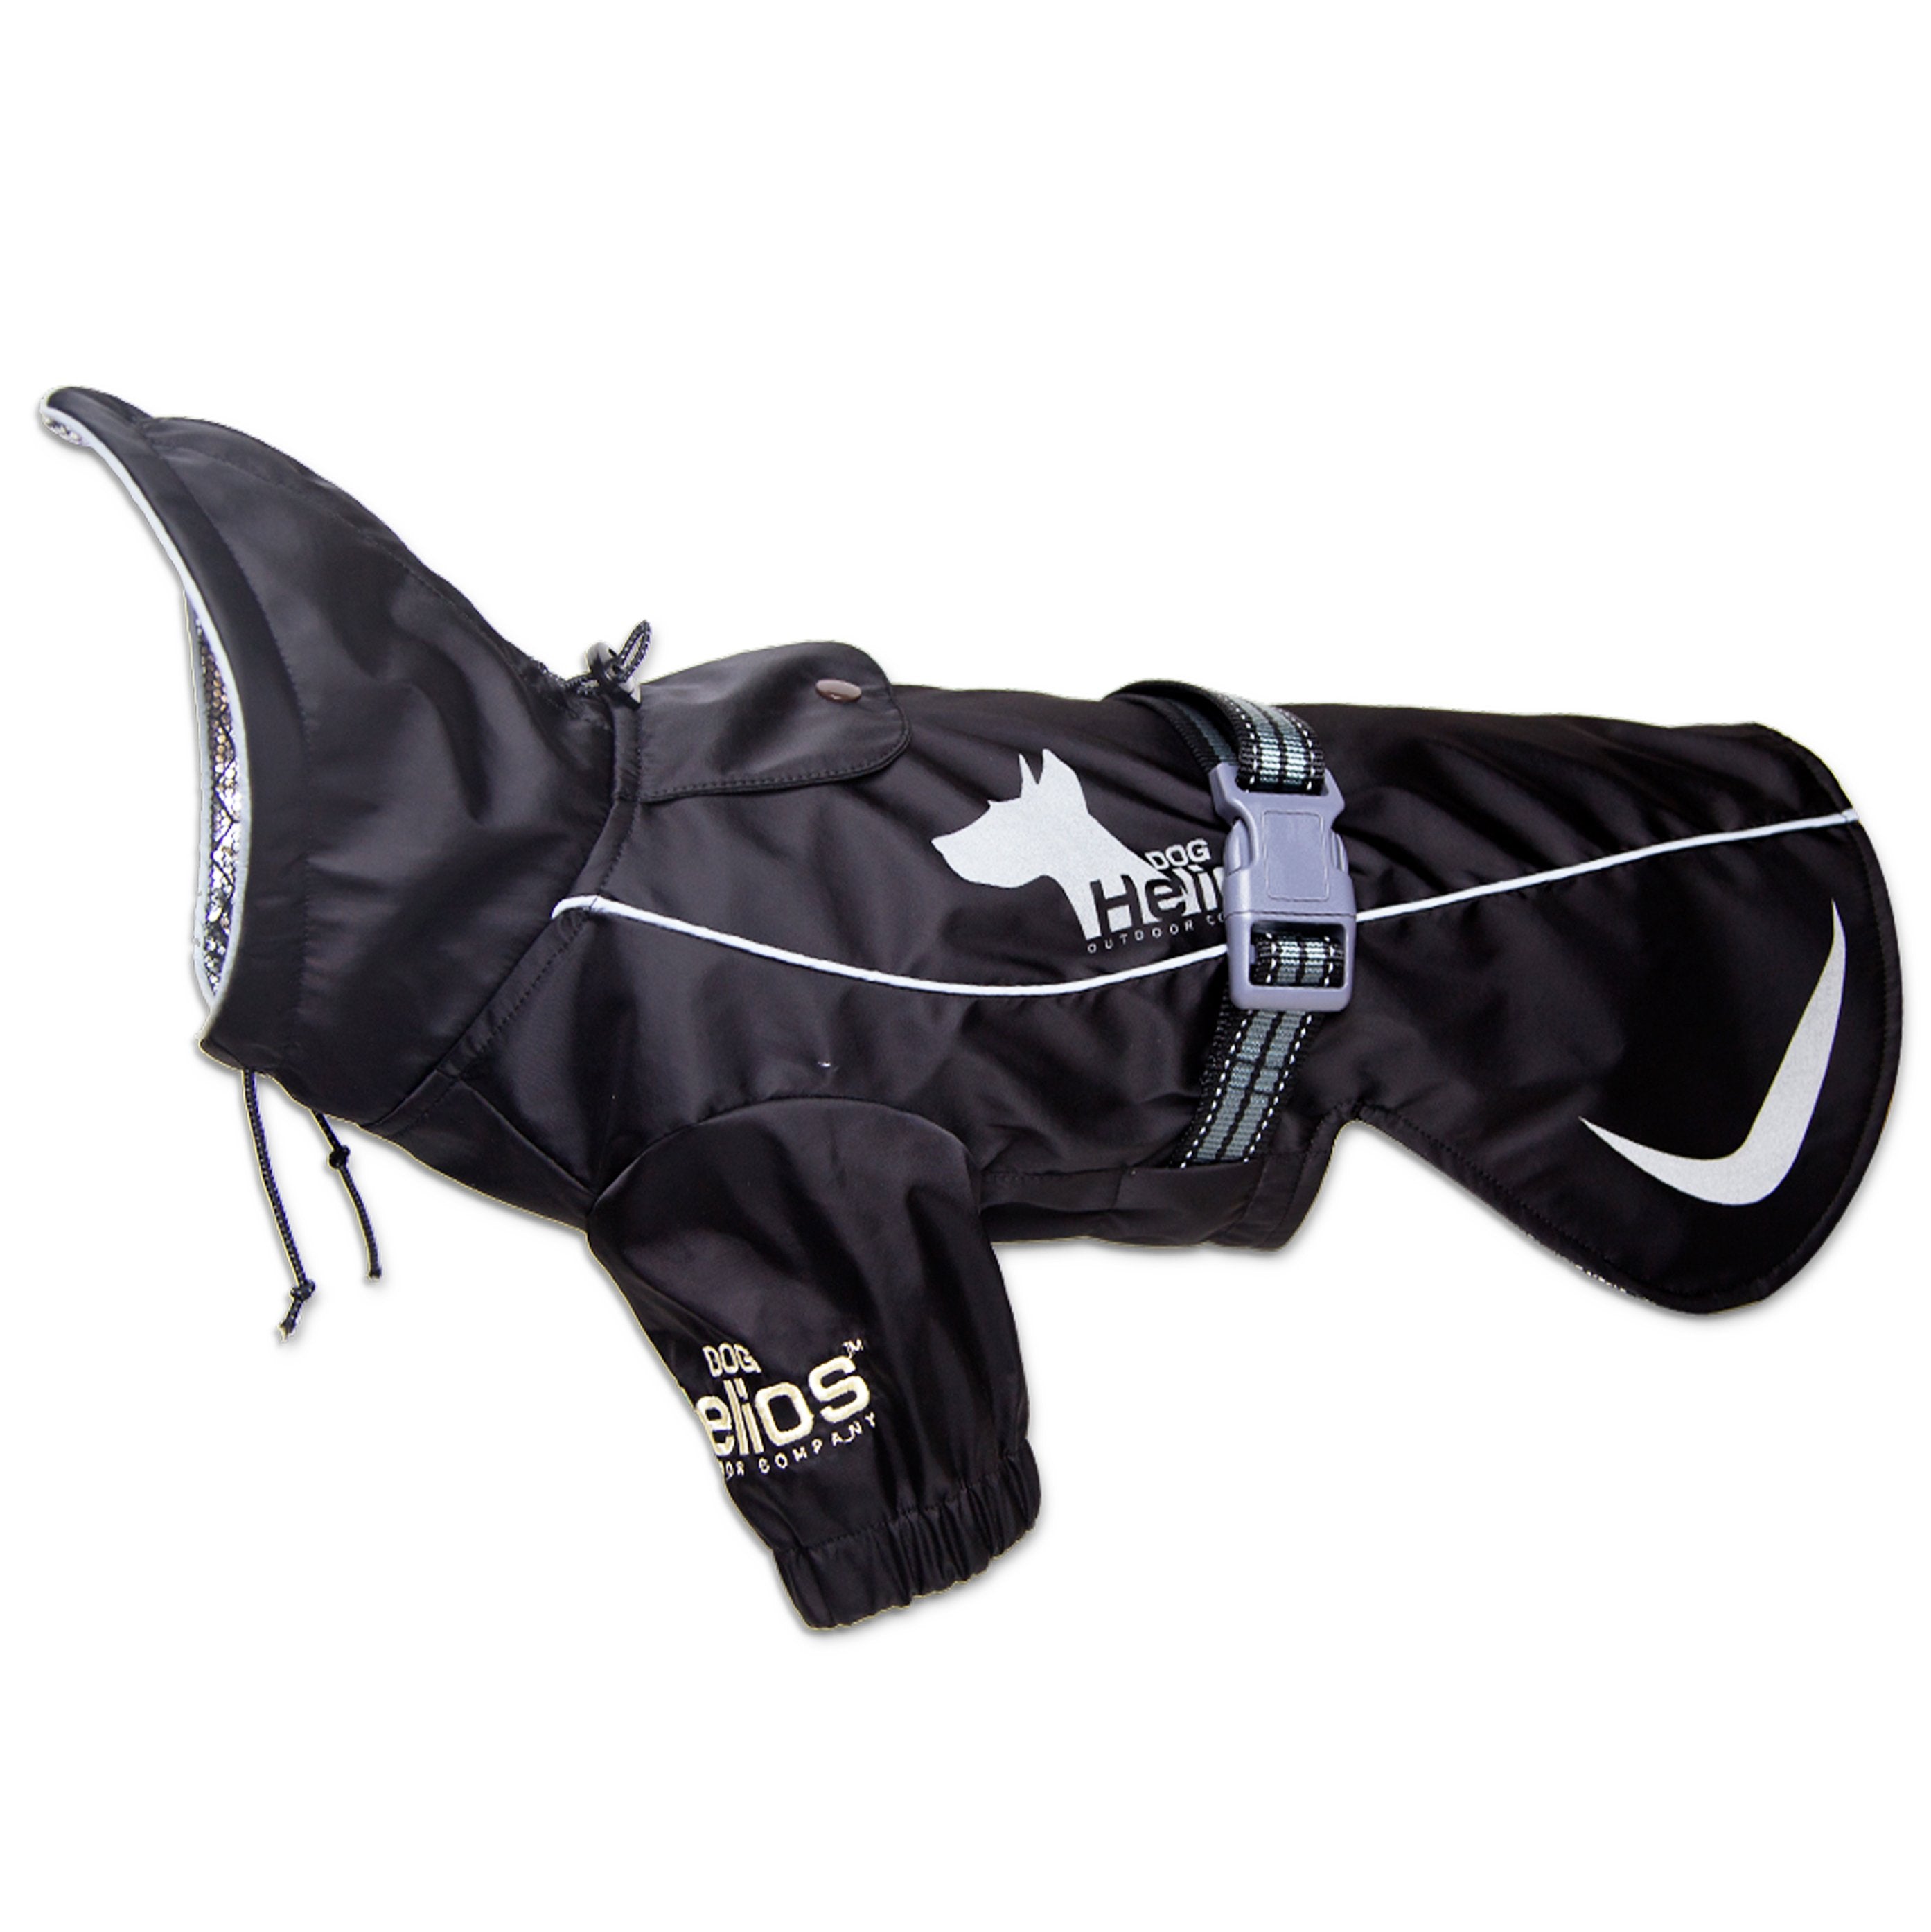 Dog Helios® 'Ice-Breaker' Hooded Dog Coat W/ Heat Reflective Tech - Black - X-Small